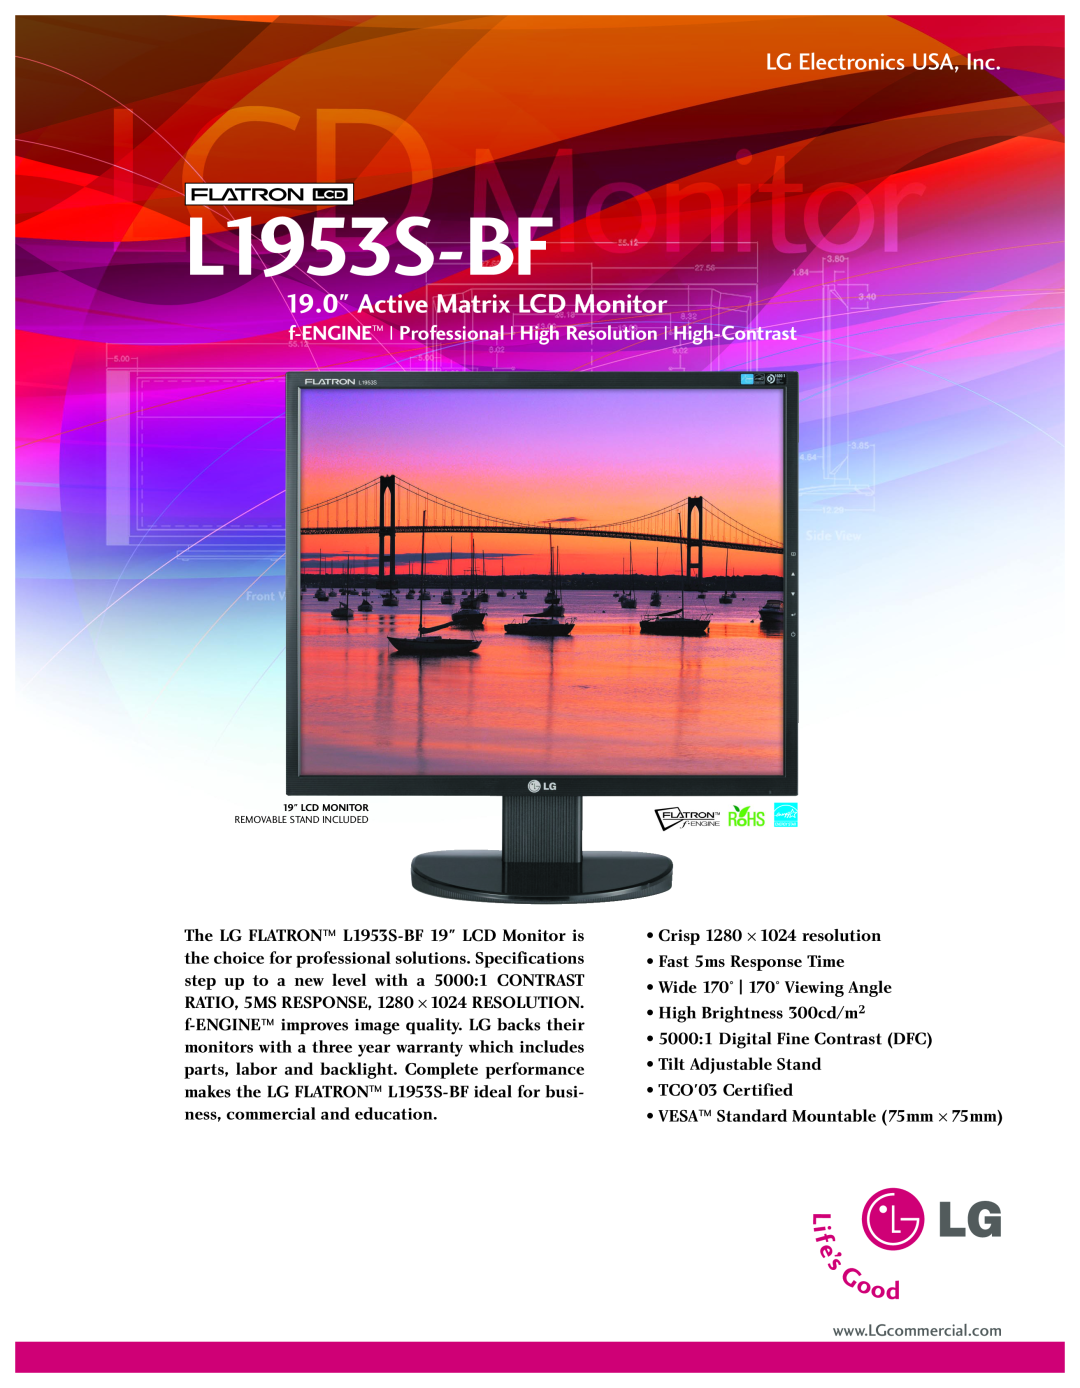 LG Electronics L1953S-BF specifications Active Matrix LCD Monitor, LG Electronics USA, Inc 